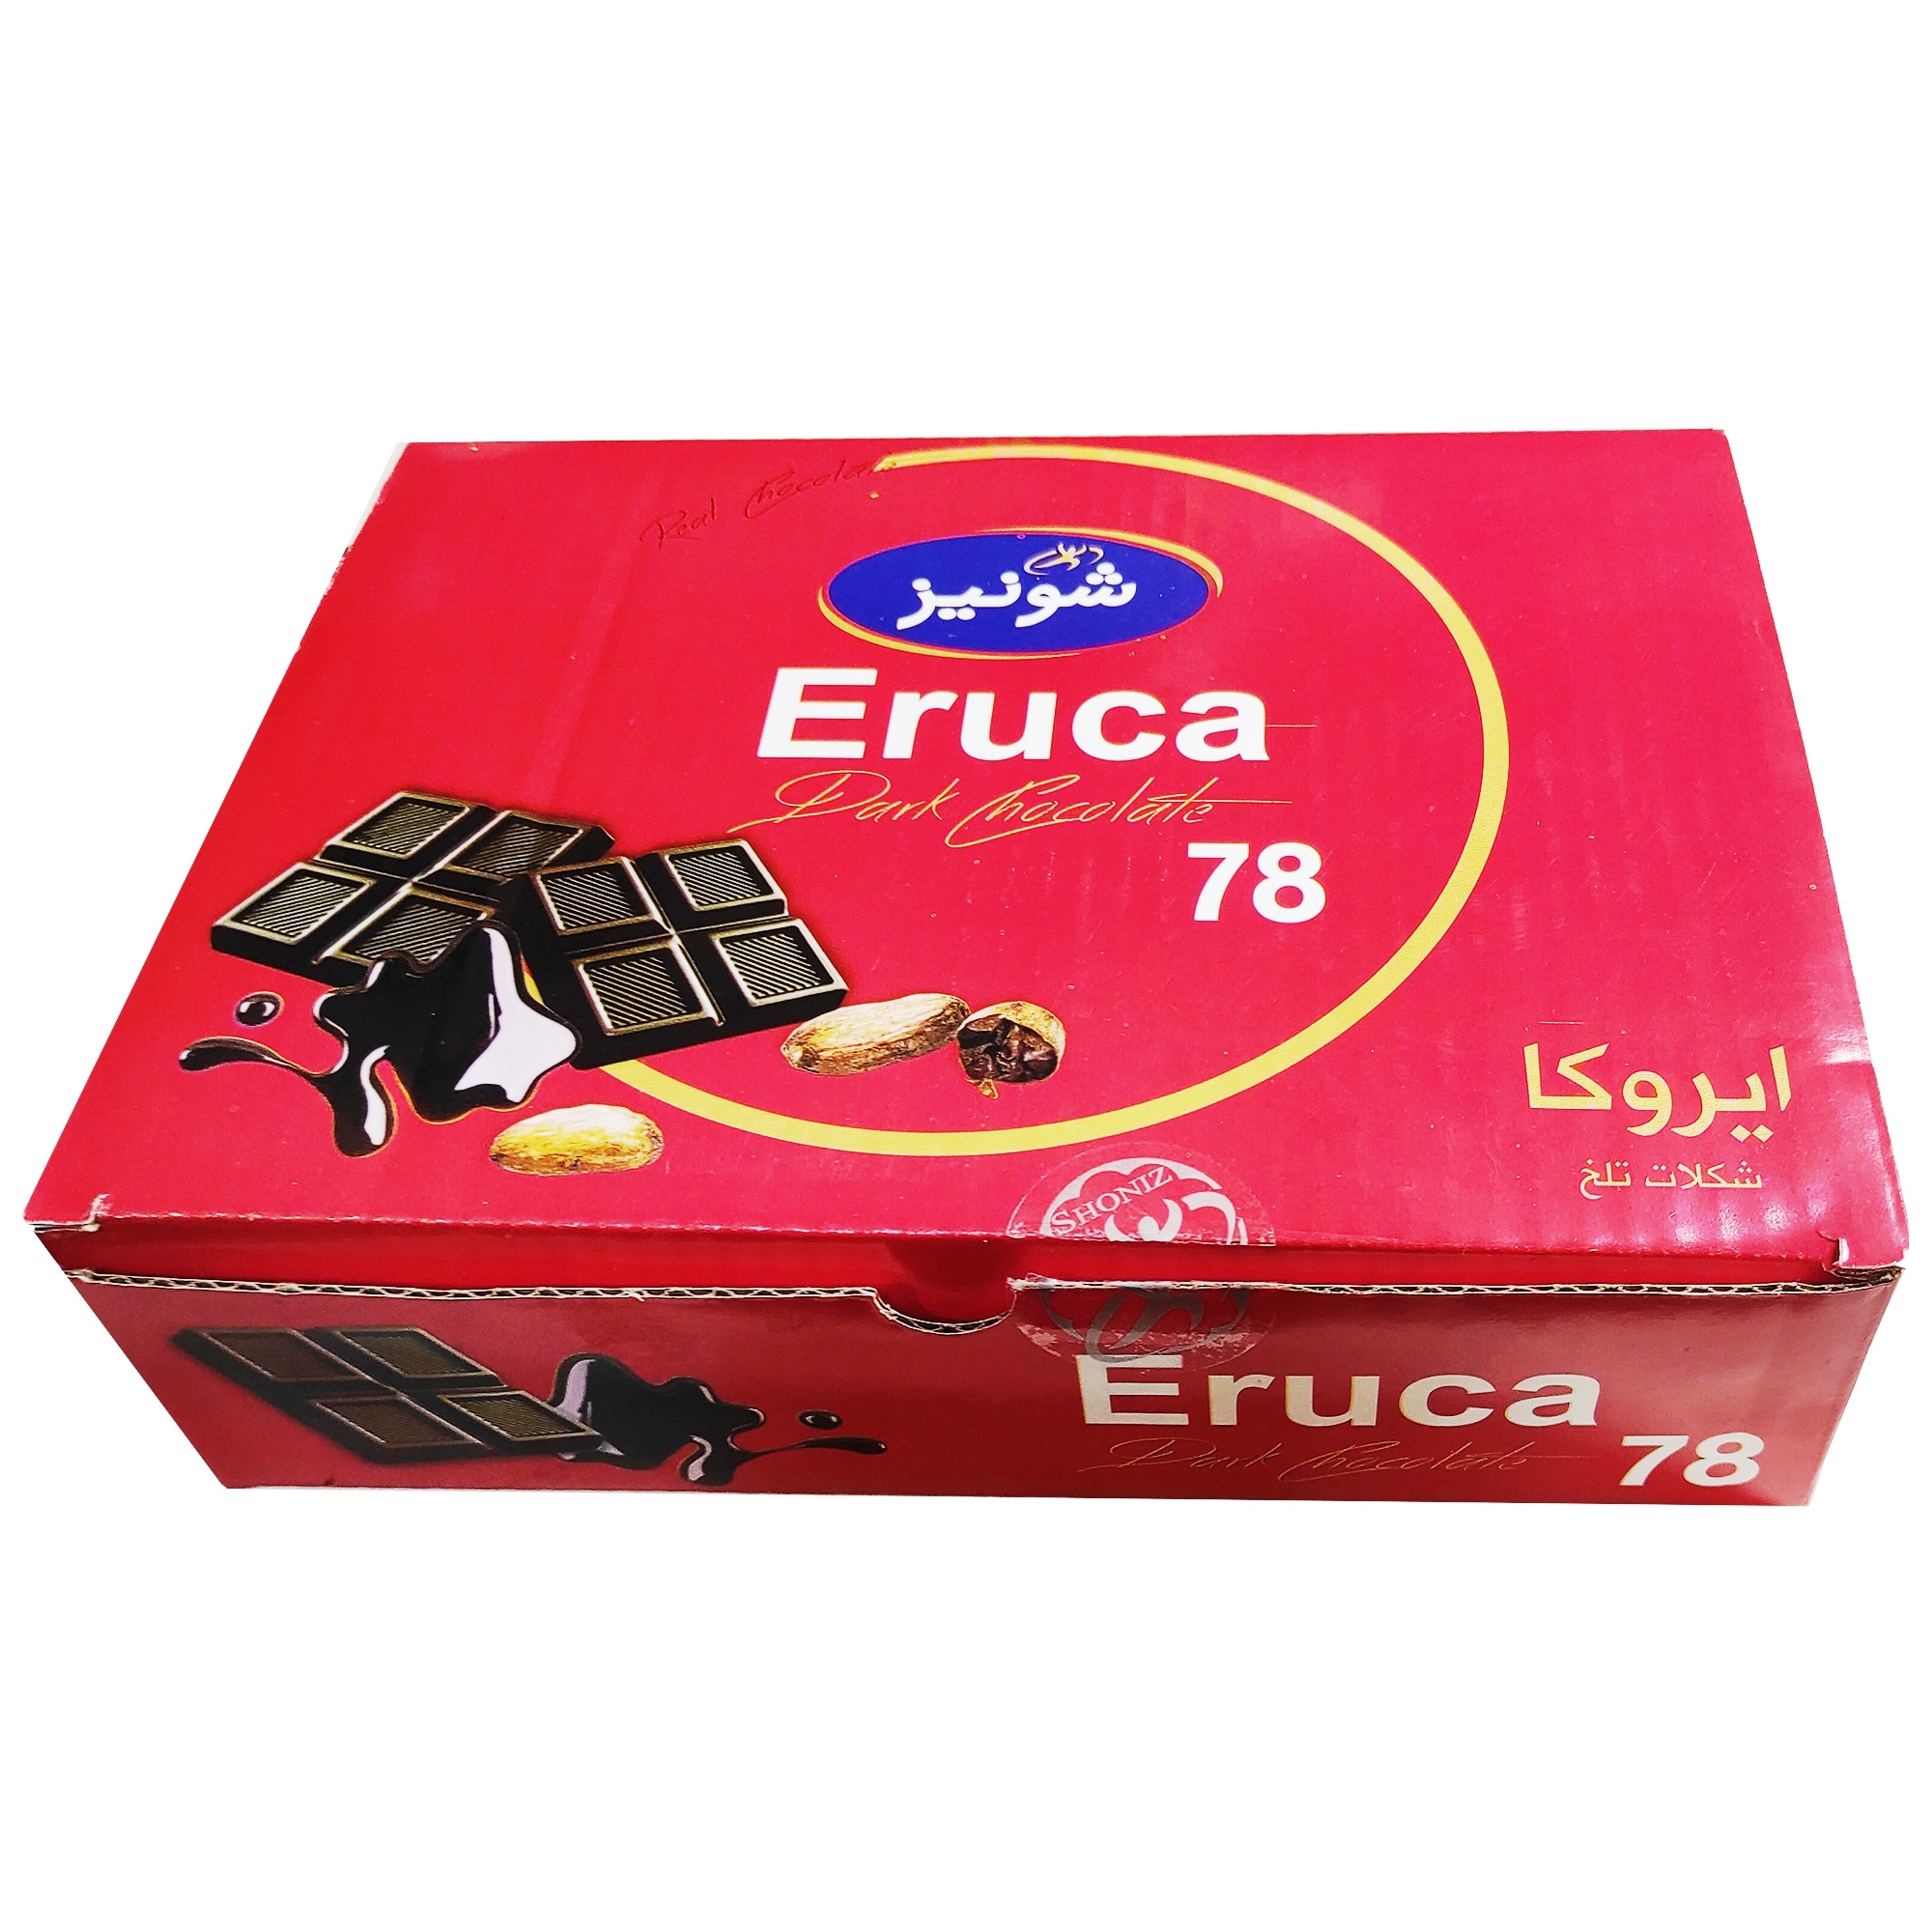 شکلات تلخ 78% ایروکا شونیز - 1 کیلوگرم